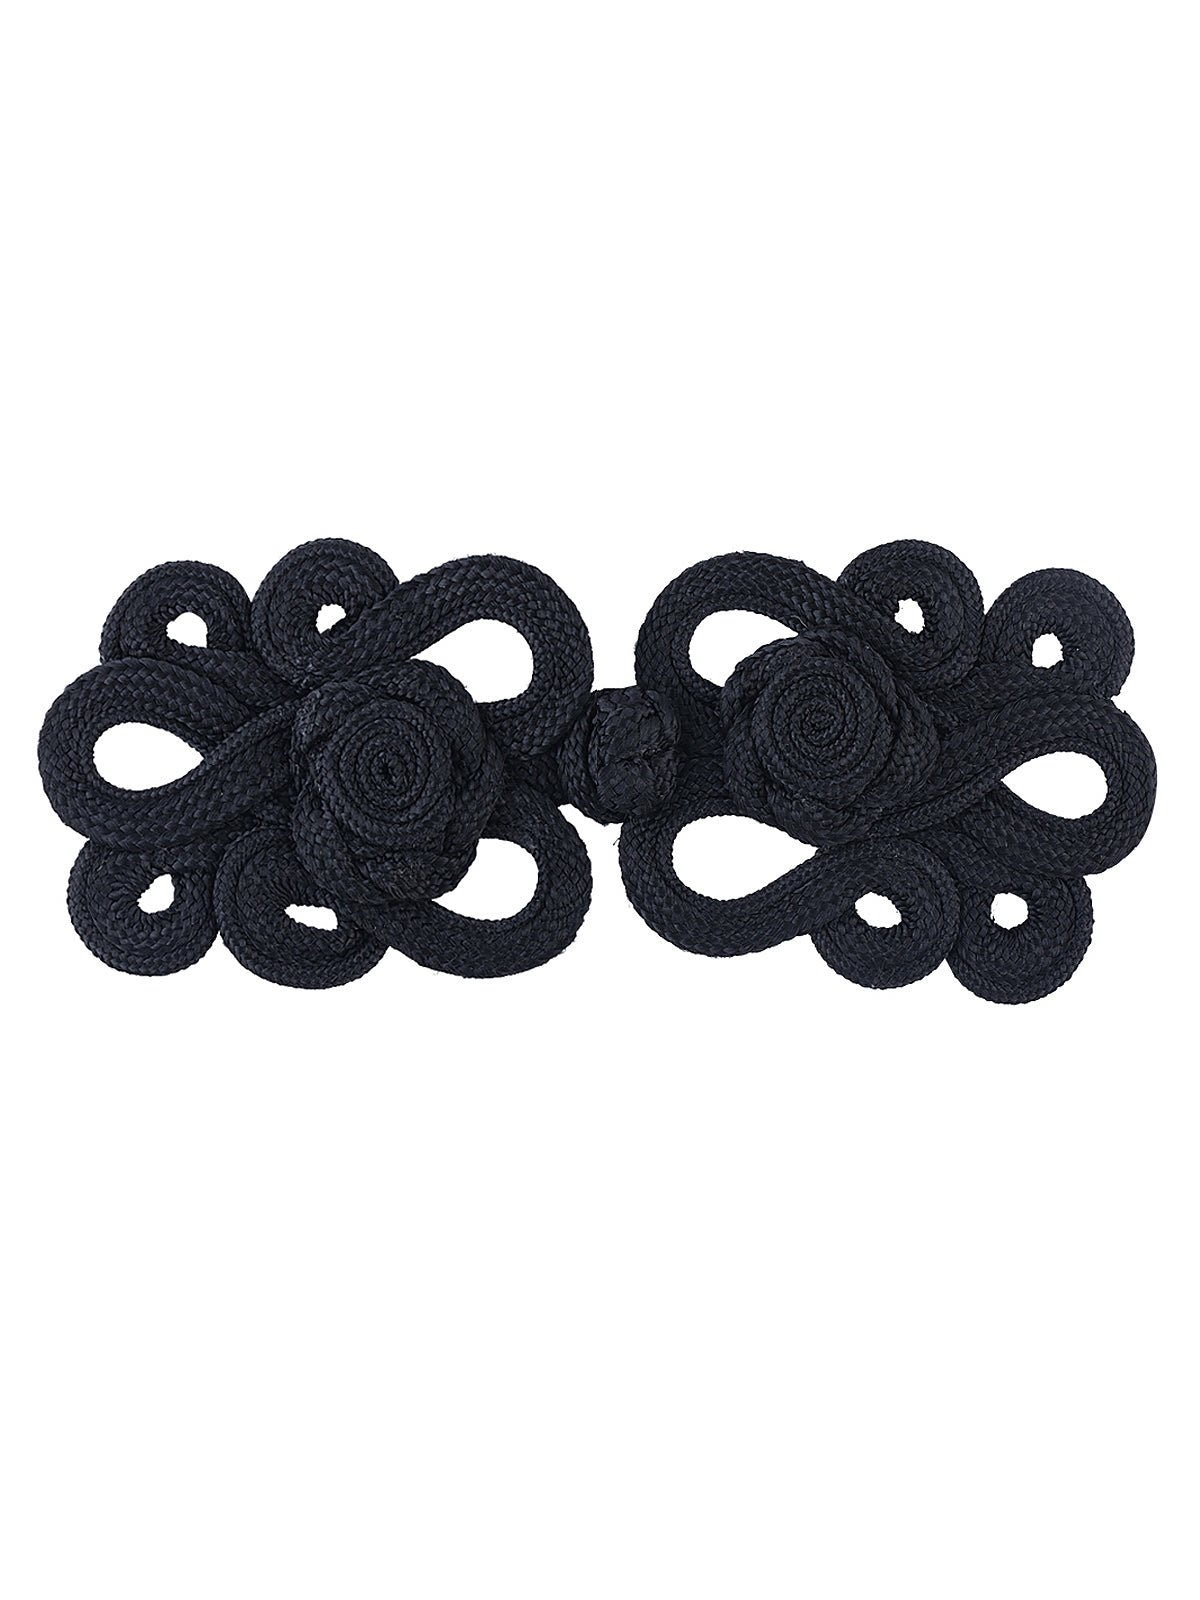 Loopy Design Black Braided Cord Frog Closure